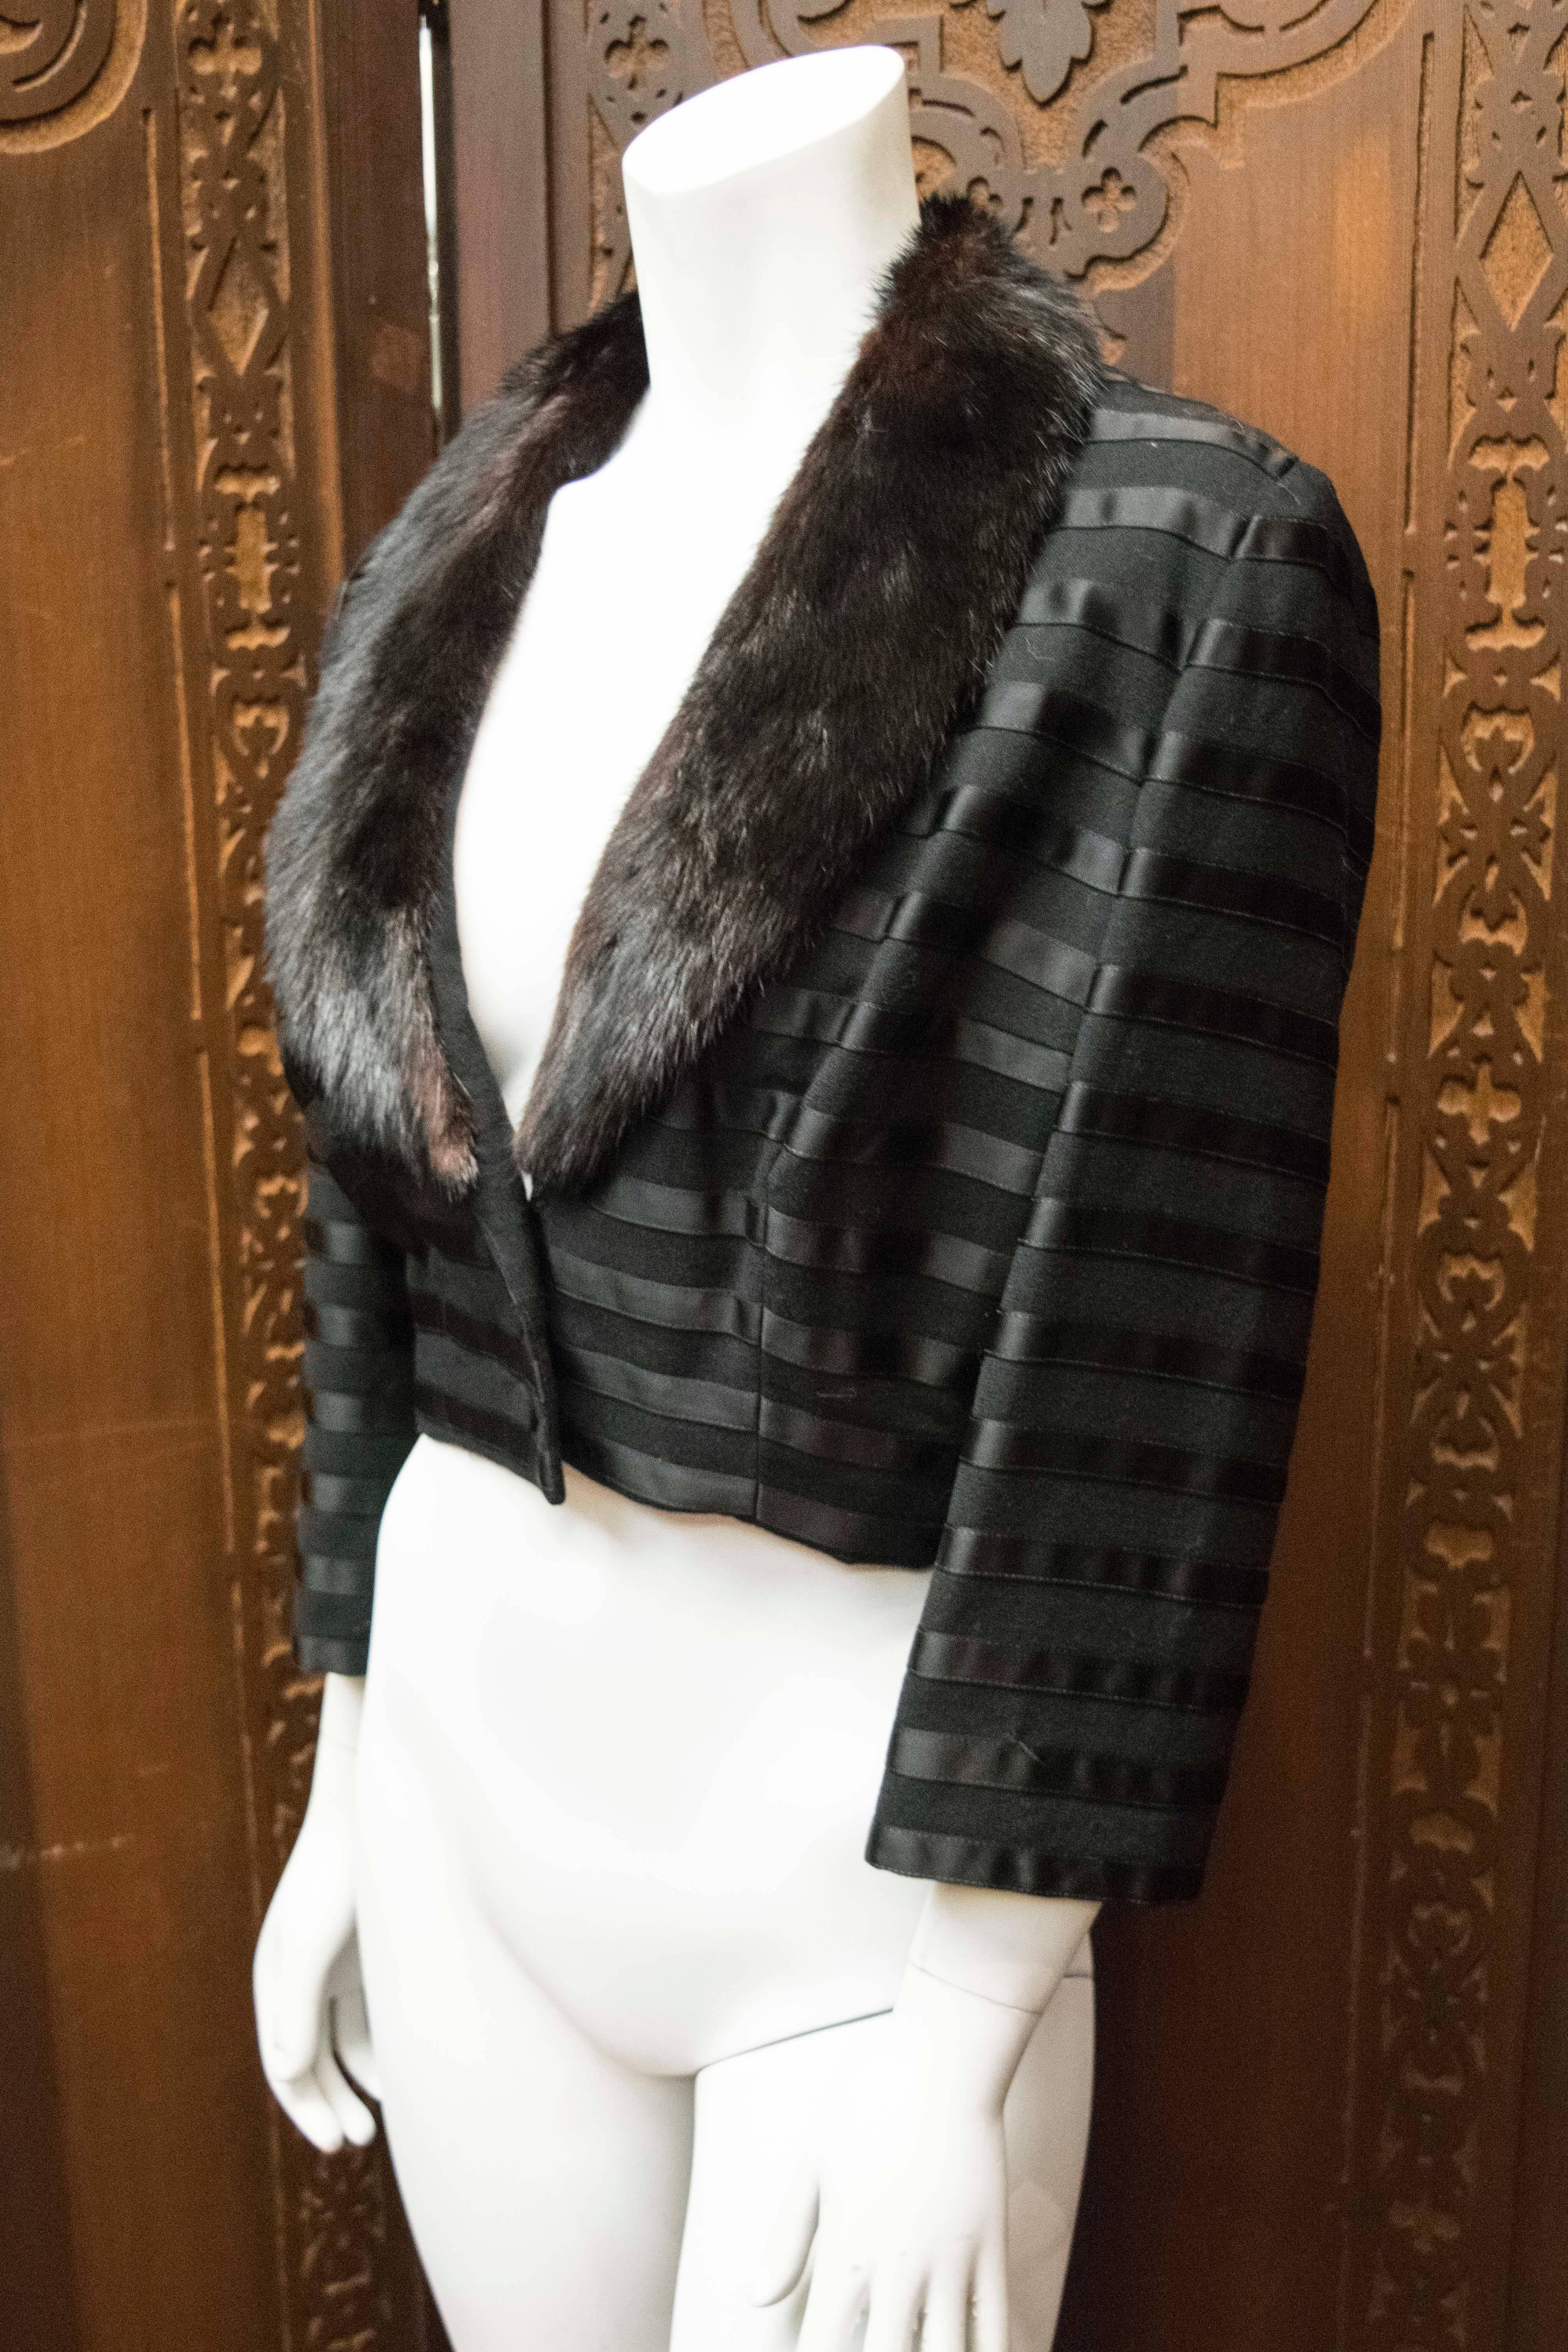 Black Bolero Jacket w/ Mink Collar

Stunning bolero jacket with silk satin stripe details and fabulous Ranch Mink shawl collar. 

B 40 
L 19